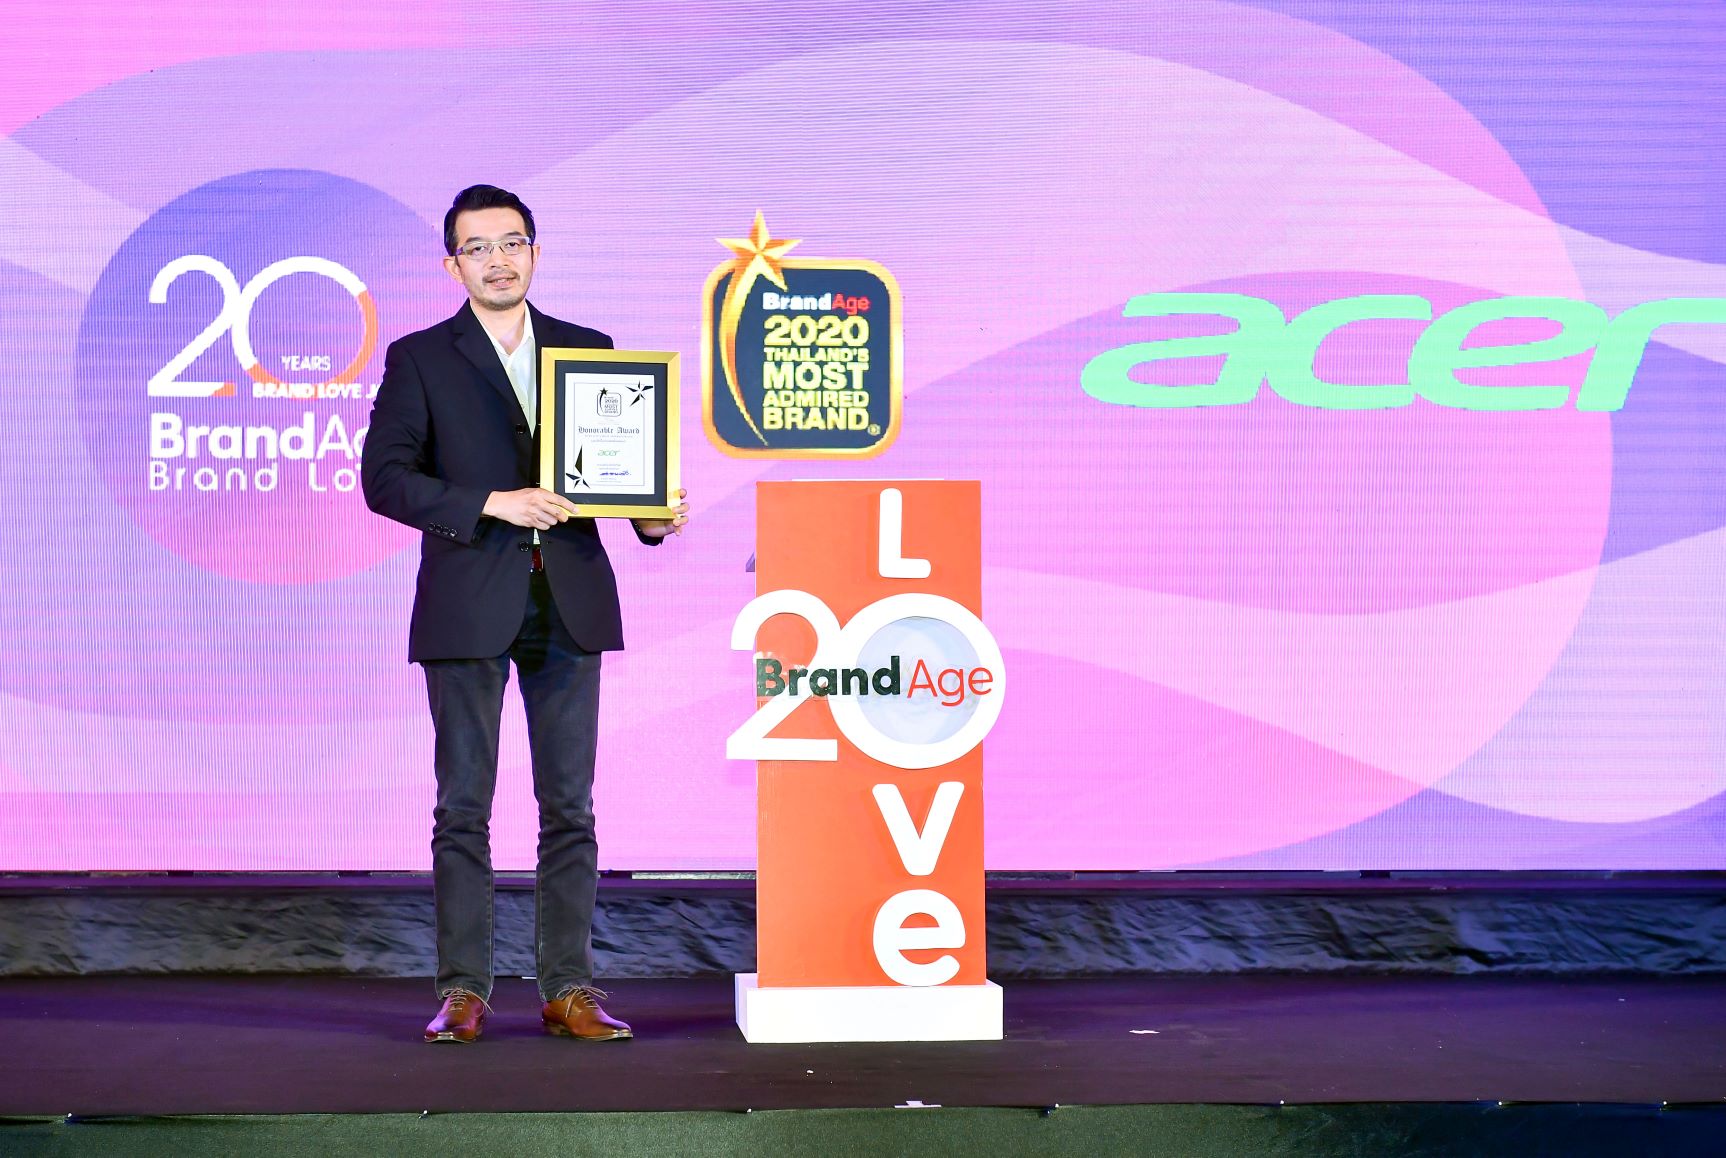 brandage 15 re ที่สุดของความภาคภูมิใจ เอเซอร์คว้า 2 รางวัลการันตีคุณภาพ Thailand’s Most Admired Brand 2020 ต่อเนื่องเป็นปีที่ 10 และ Thailands Most Admired Company 2019 จากนิตยสารแบรนด์เอจ